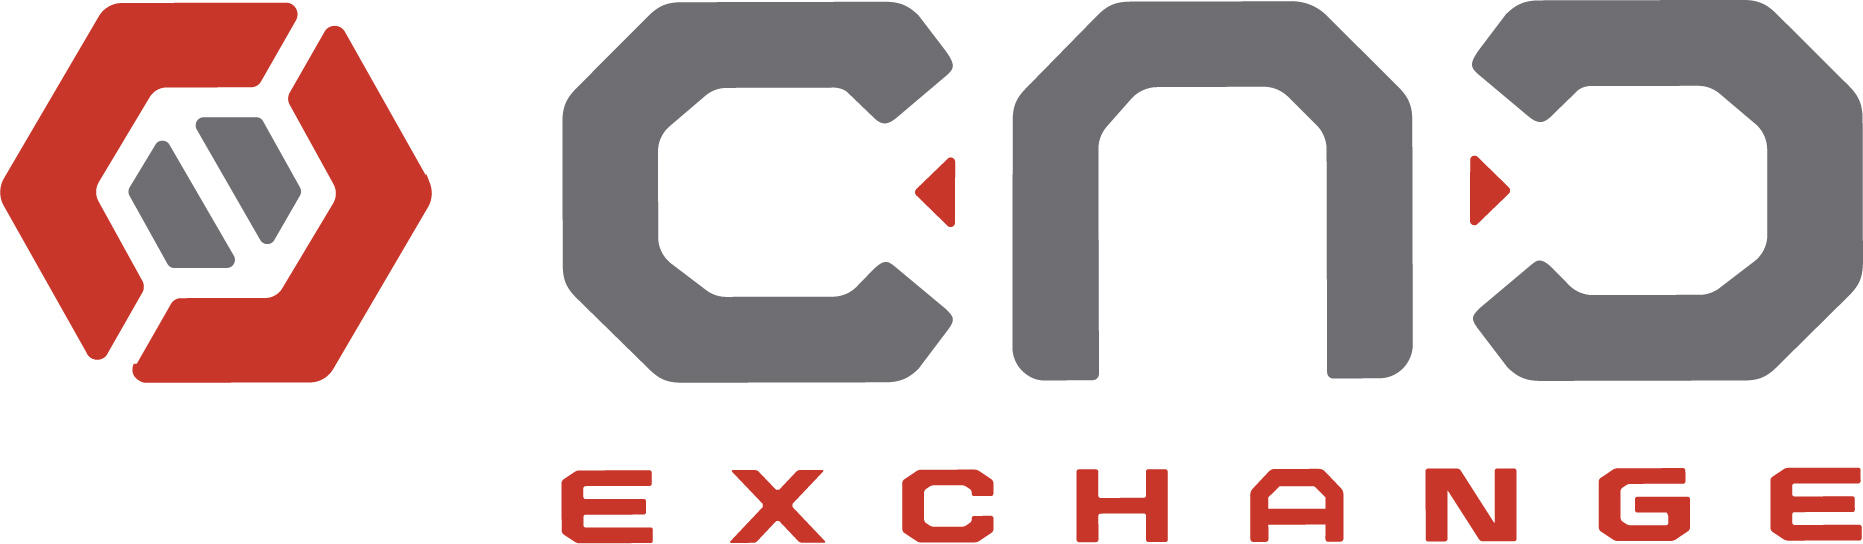 CNC EXCHANGE Logo